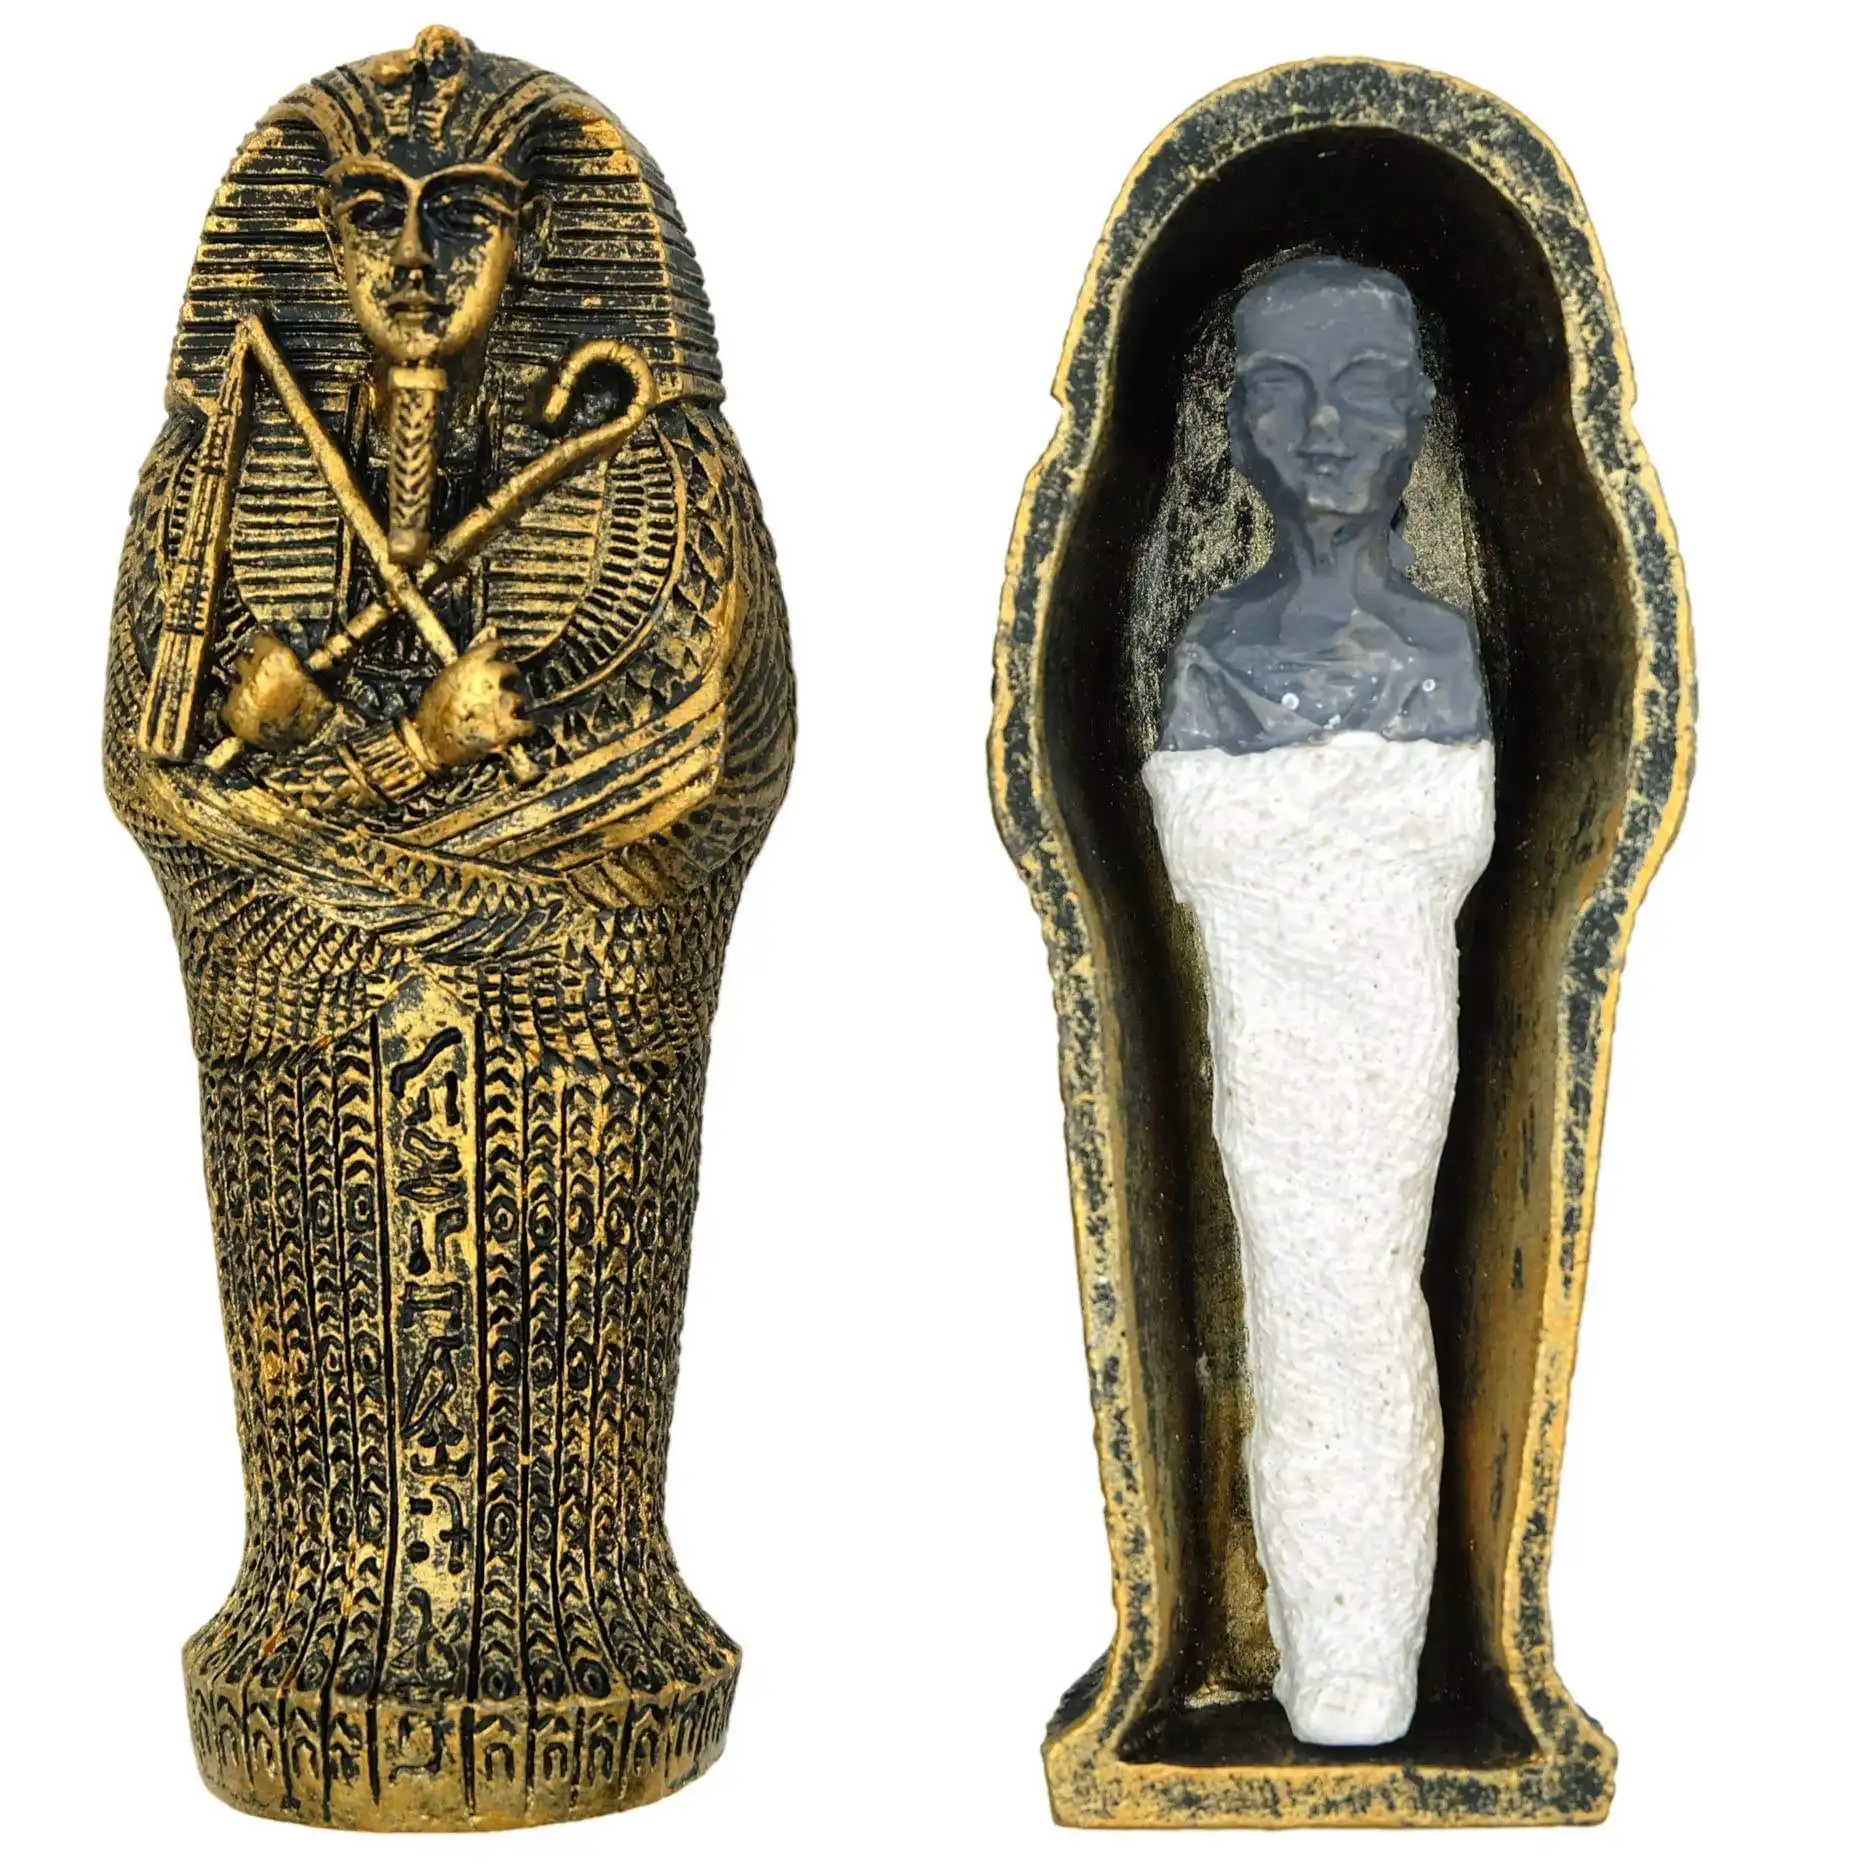 Momia Faraón Sarcófago Estatuilla Huaqi SKB25 Antiguo Egipto Faraón Cleopatra momia ataúd Resina maceta adornos